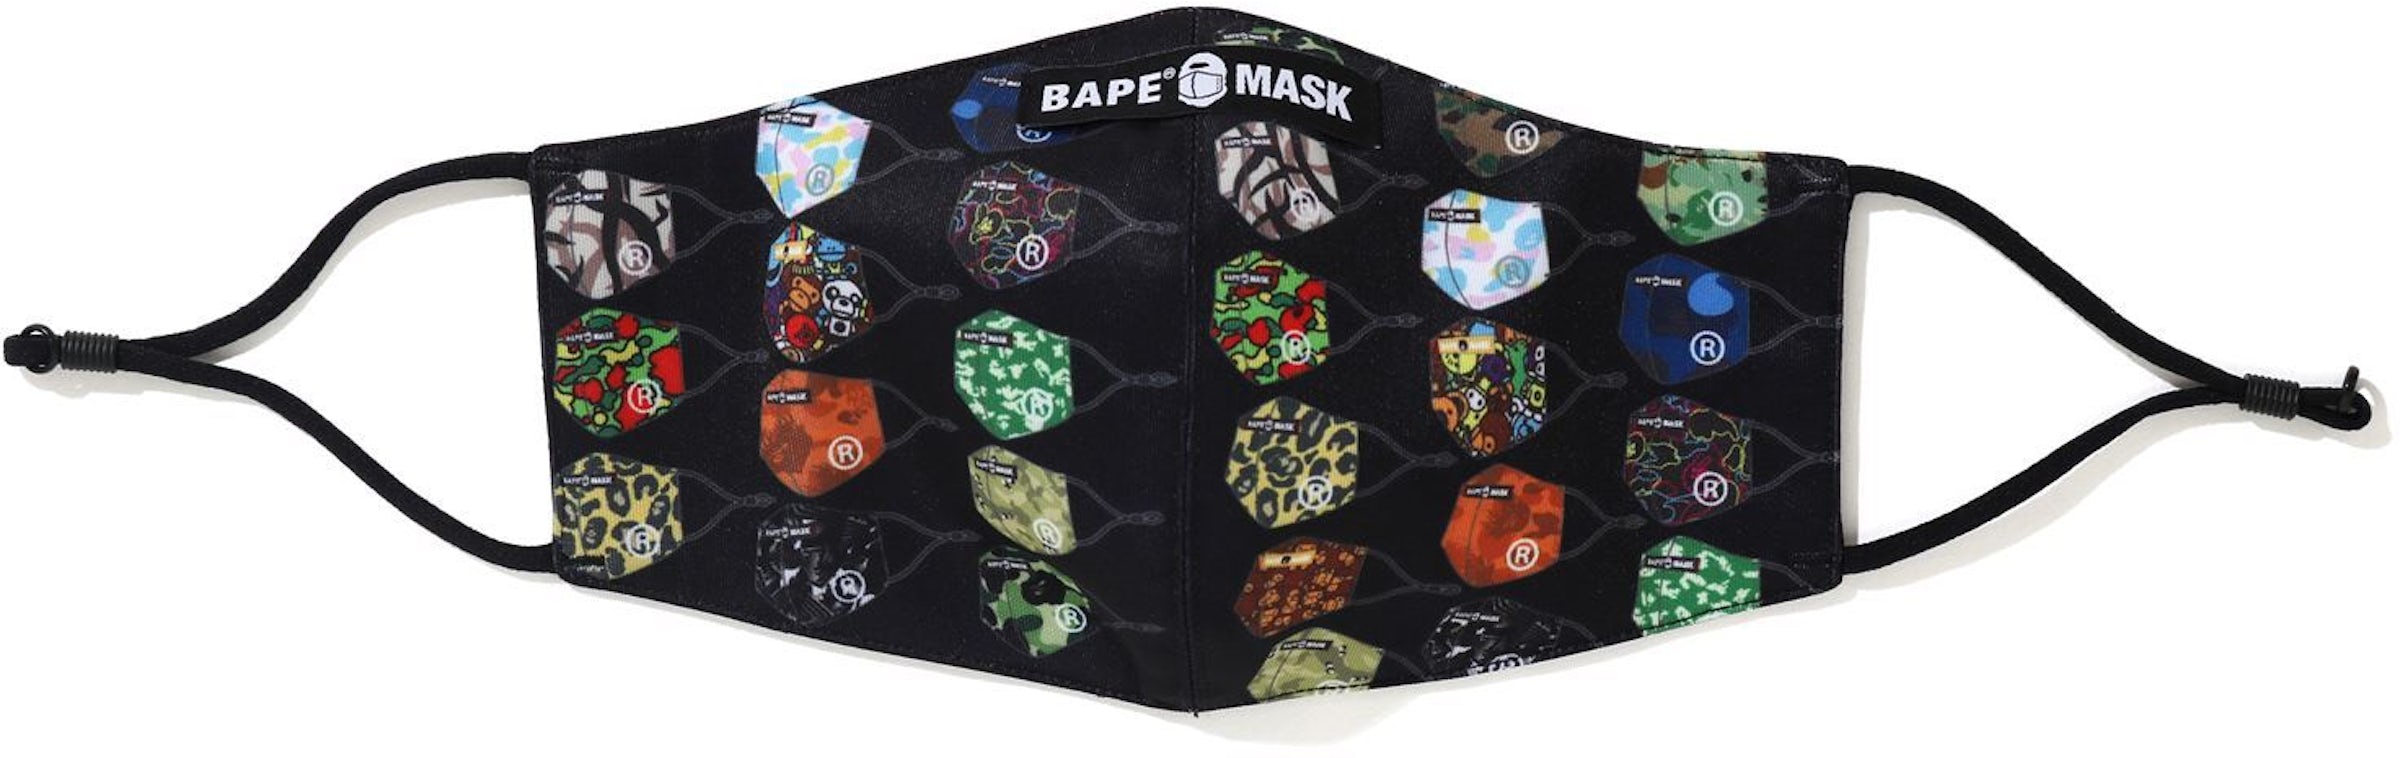 BAPE Face Mask / Cover - A Bathing Ape - Shark Mouth - Washable & Reusable